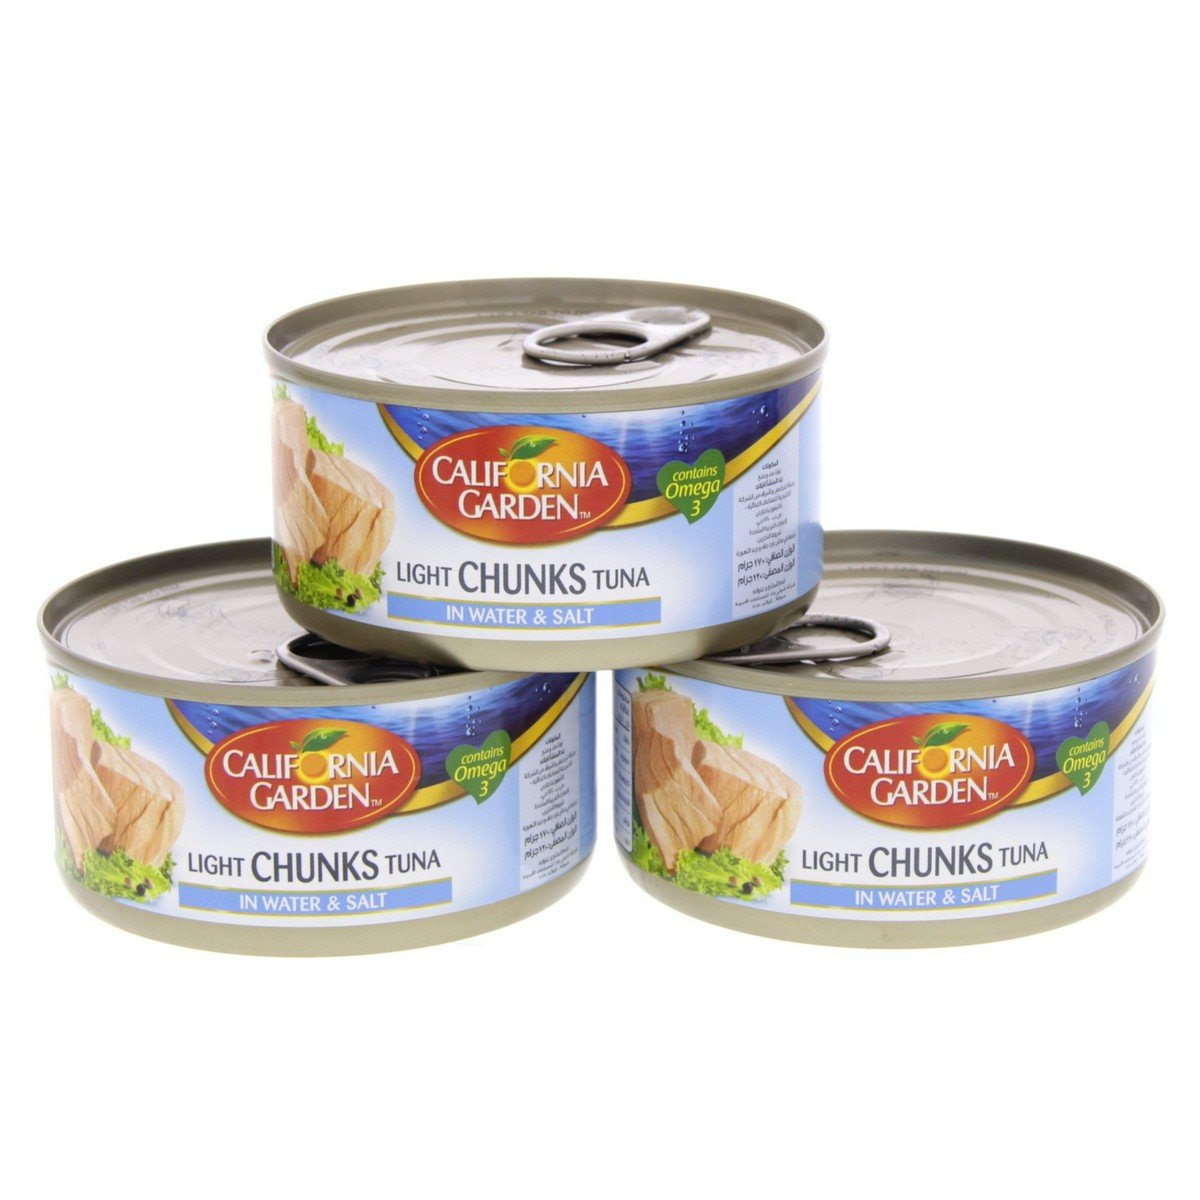 California Garden Light Ckunks Tuna in Water and Salt 3 x 170 g